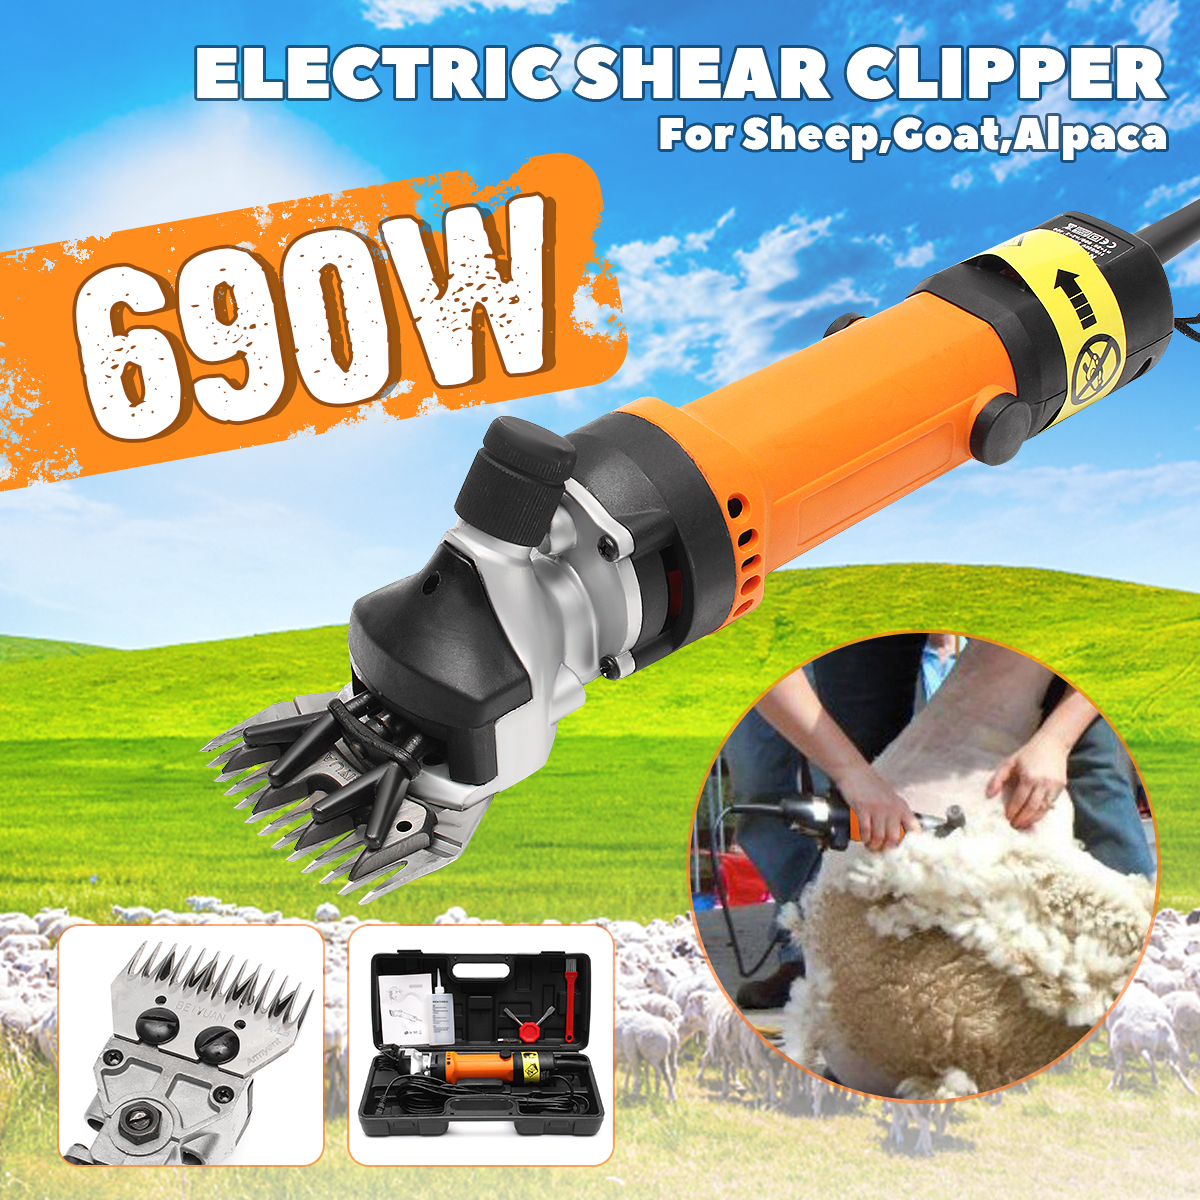 690W-220V-3600rmin-Electric-Shearing-Clipper-Shear-Sheep-Goats-Wools-Hair-Farm-Alpaca-Shears-1550204-1